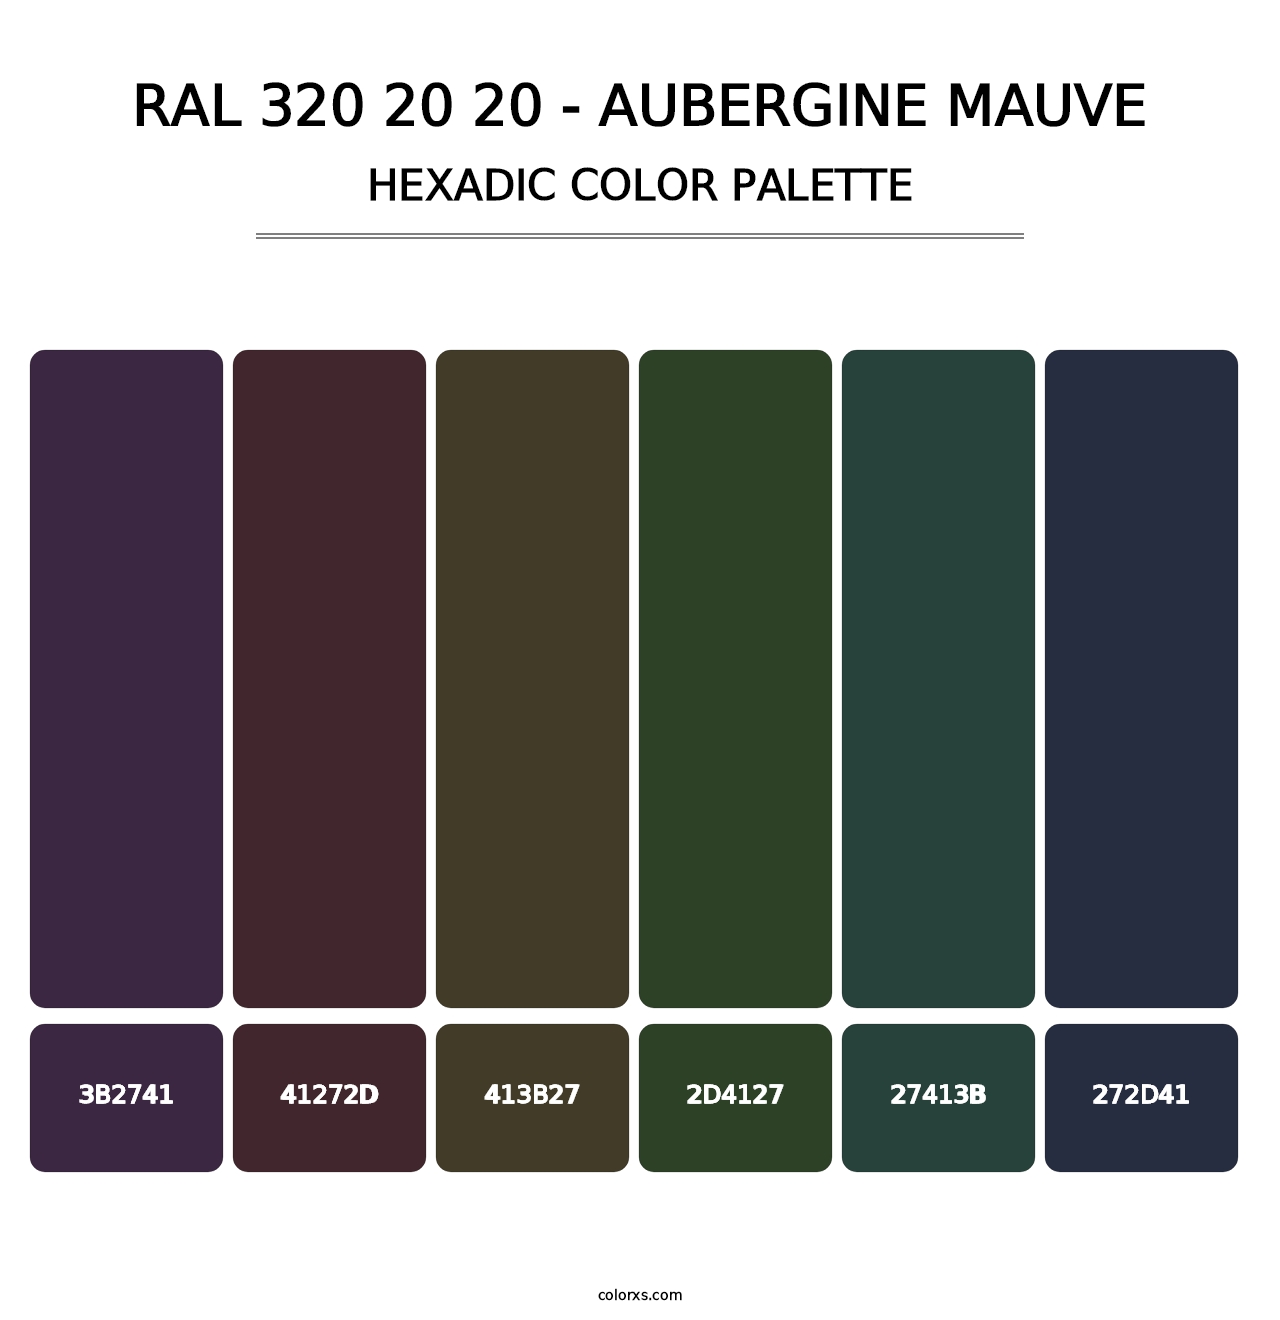 RAL 320 20 20 - Aubergine Mauve - Hexadic Color Palette